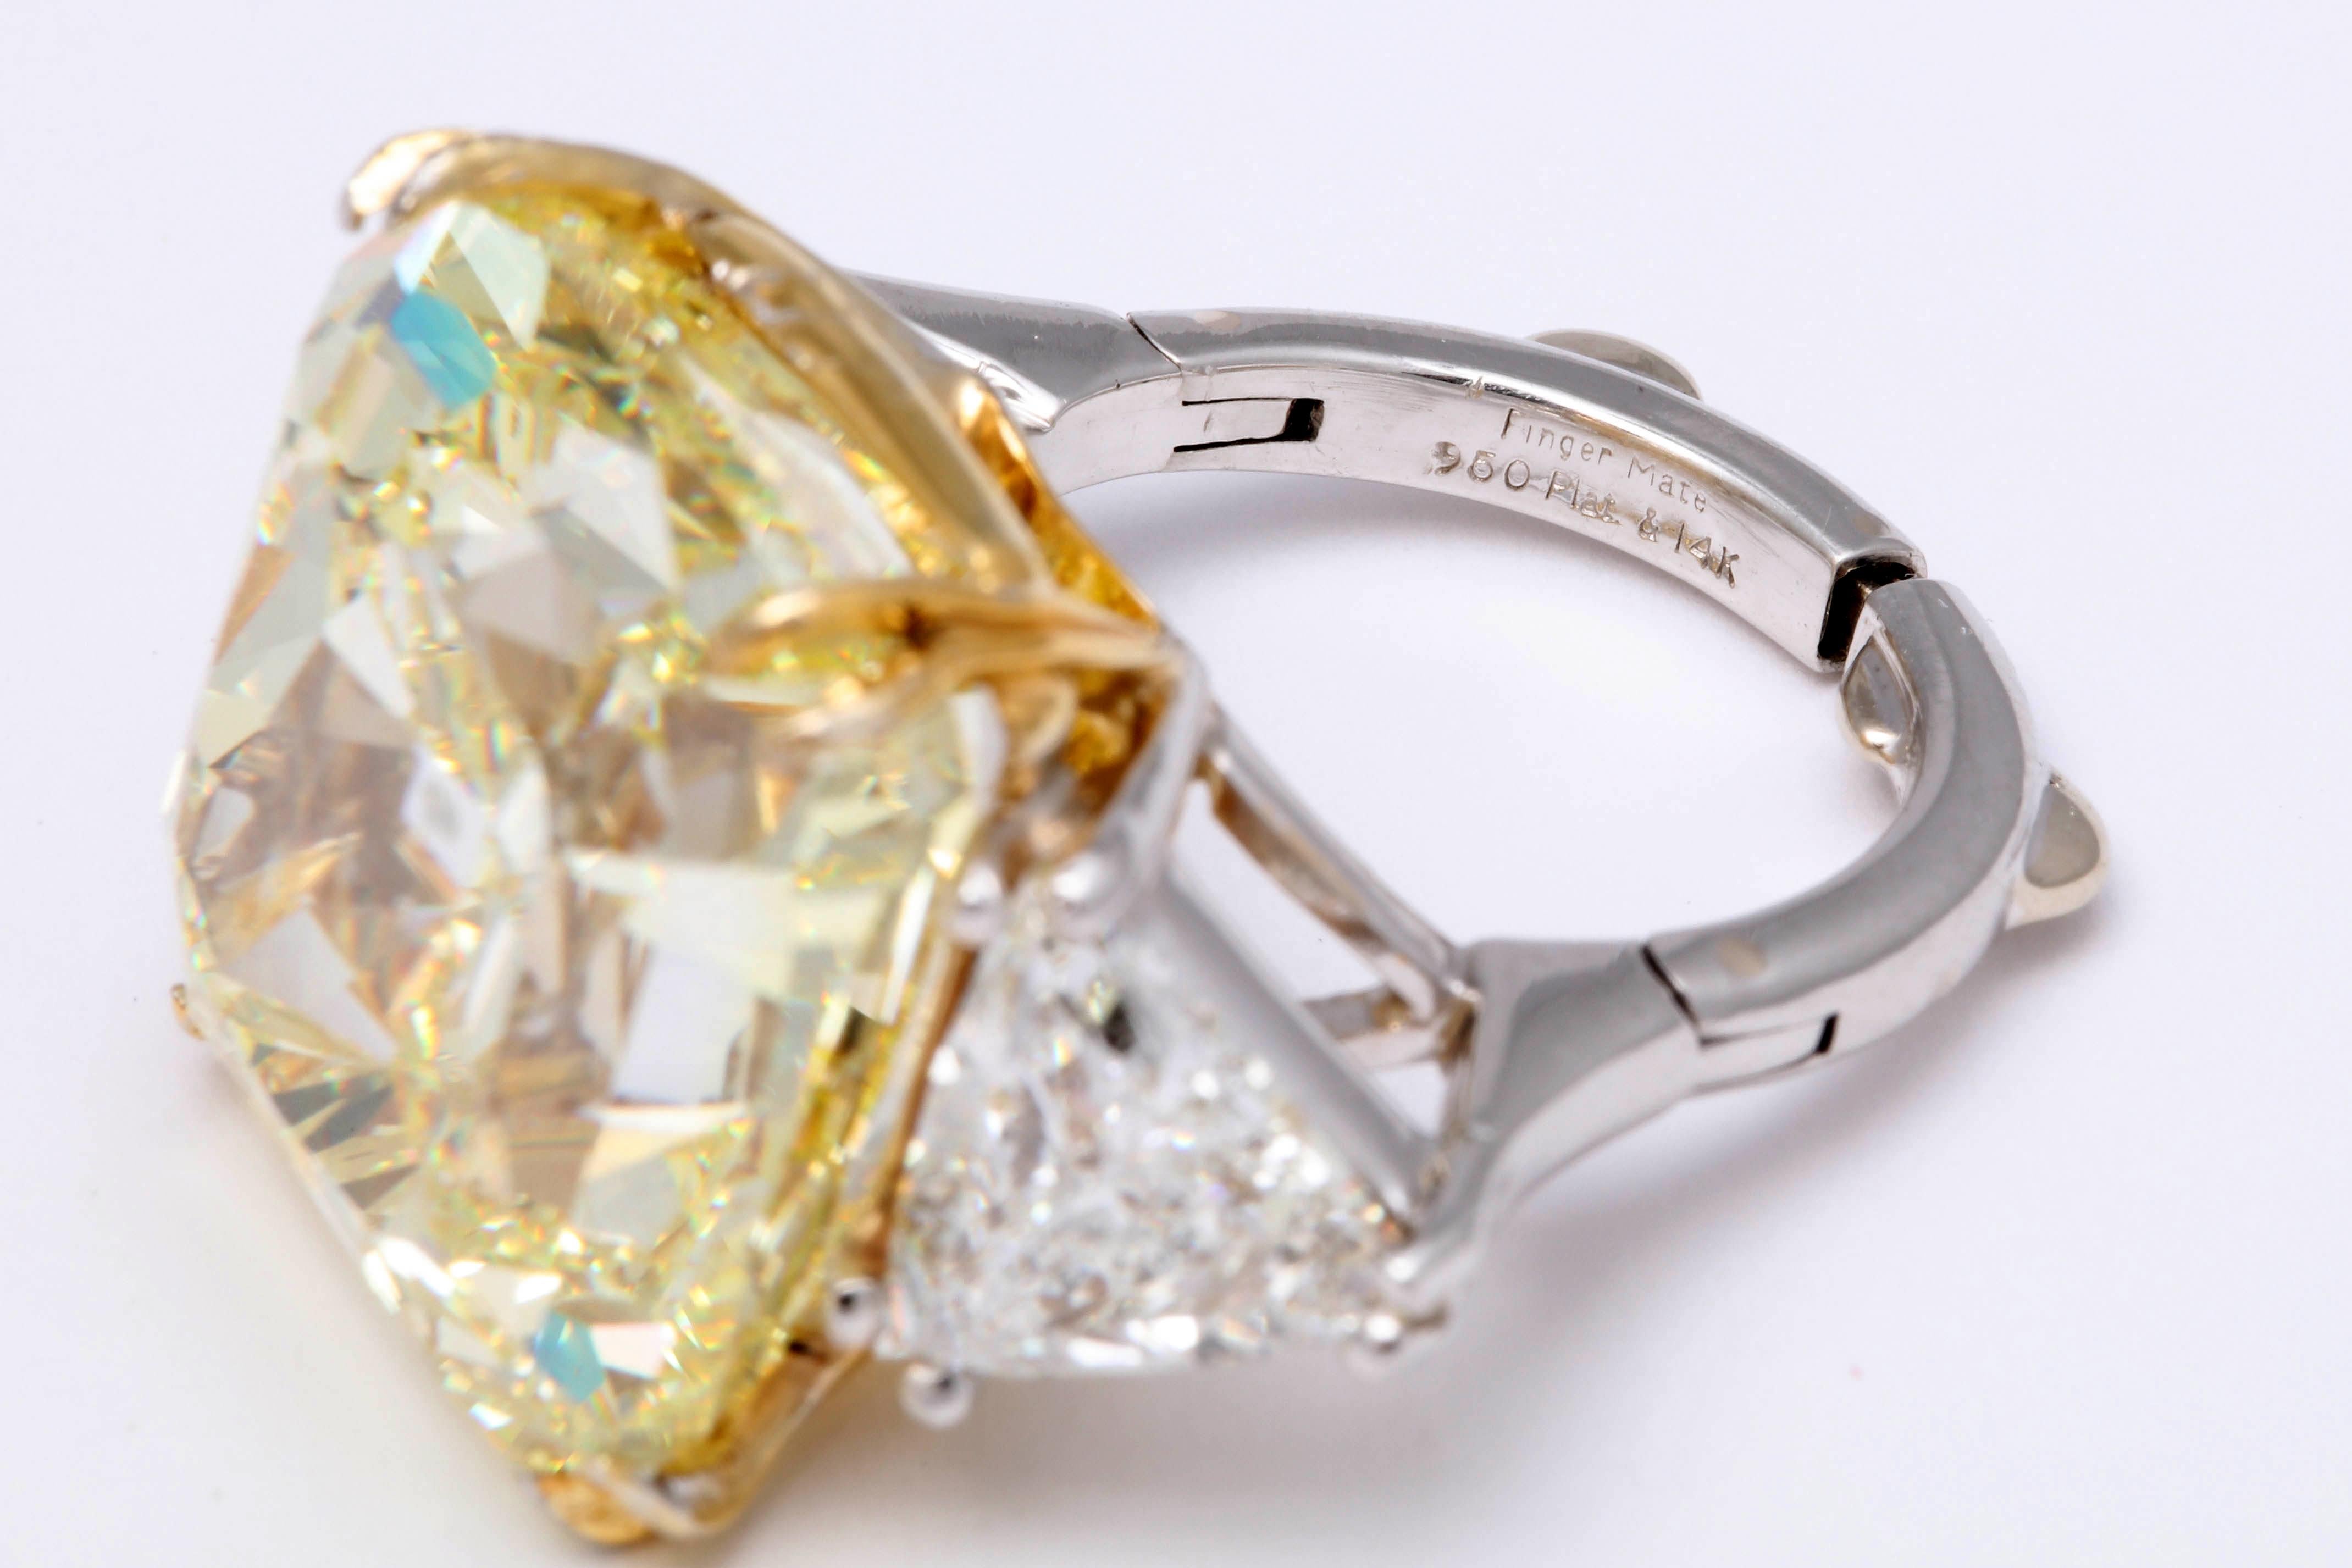 Exquisite Fancy Light Yellow Diamond Ring 4.40 Ct Sieraden Ringen Bruiloft & Verloving Verlovingsringen 5.03 Ct TW Cushion Shape GIA Certified 2215461851 Elegant Dainty Jewelry Gift For Women 